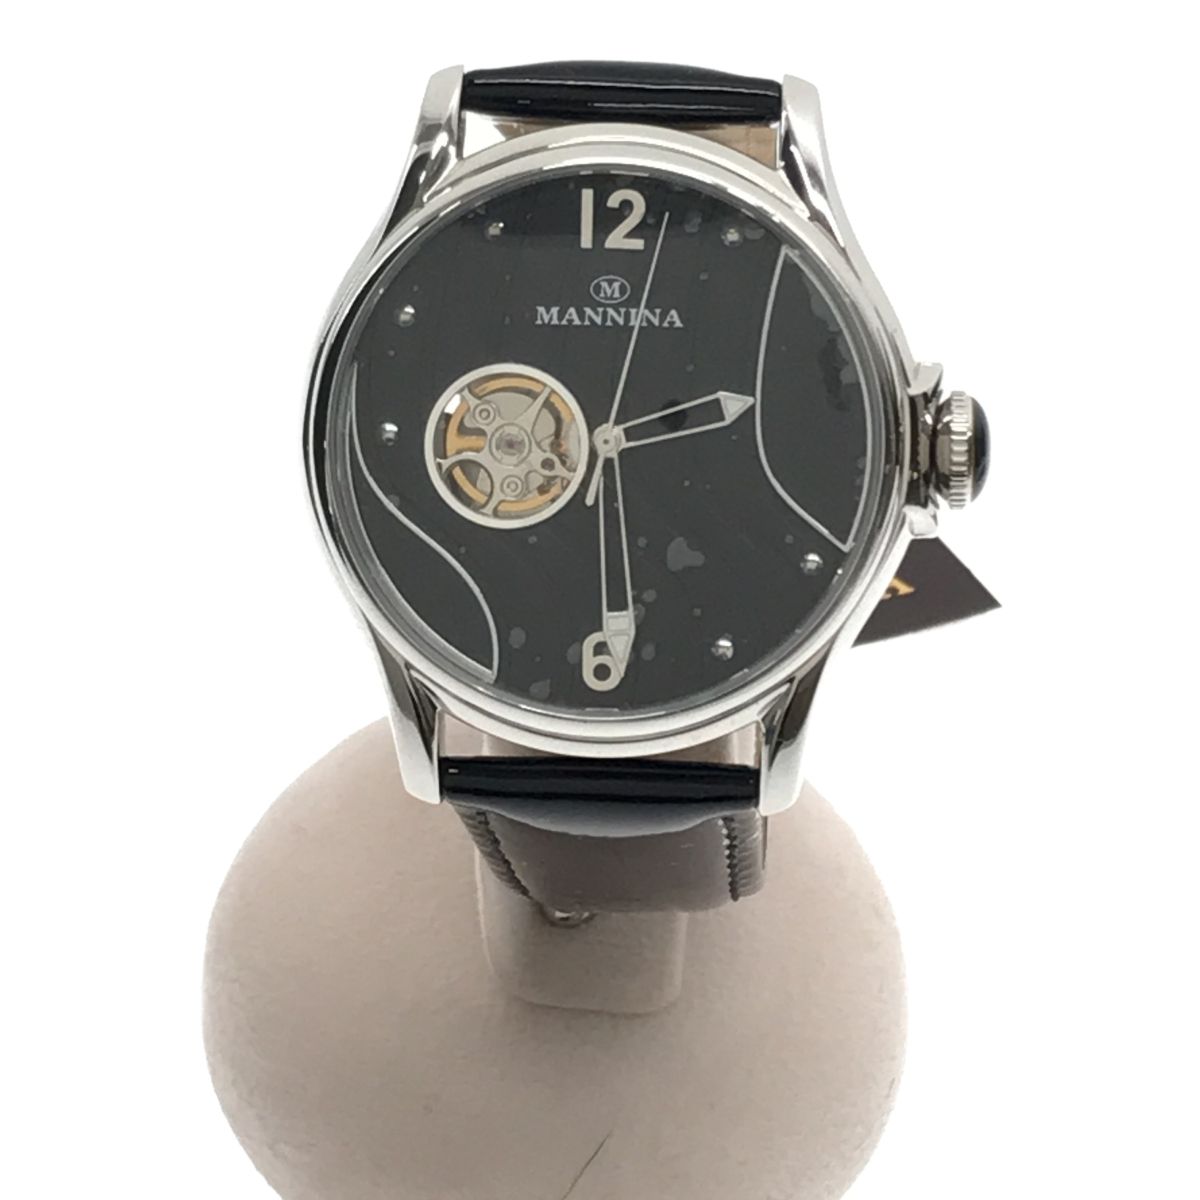 MANNINA(マンニーナ) 腕時計 MNN004-03 メンズ 正規輸入品 レッド〔〕 メンズ腕時計